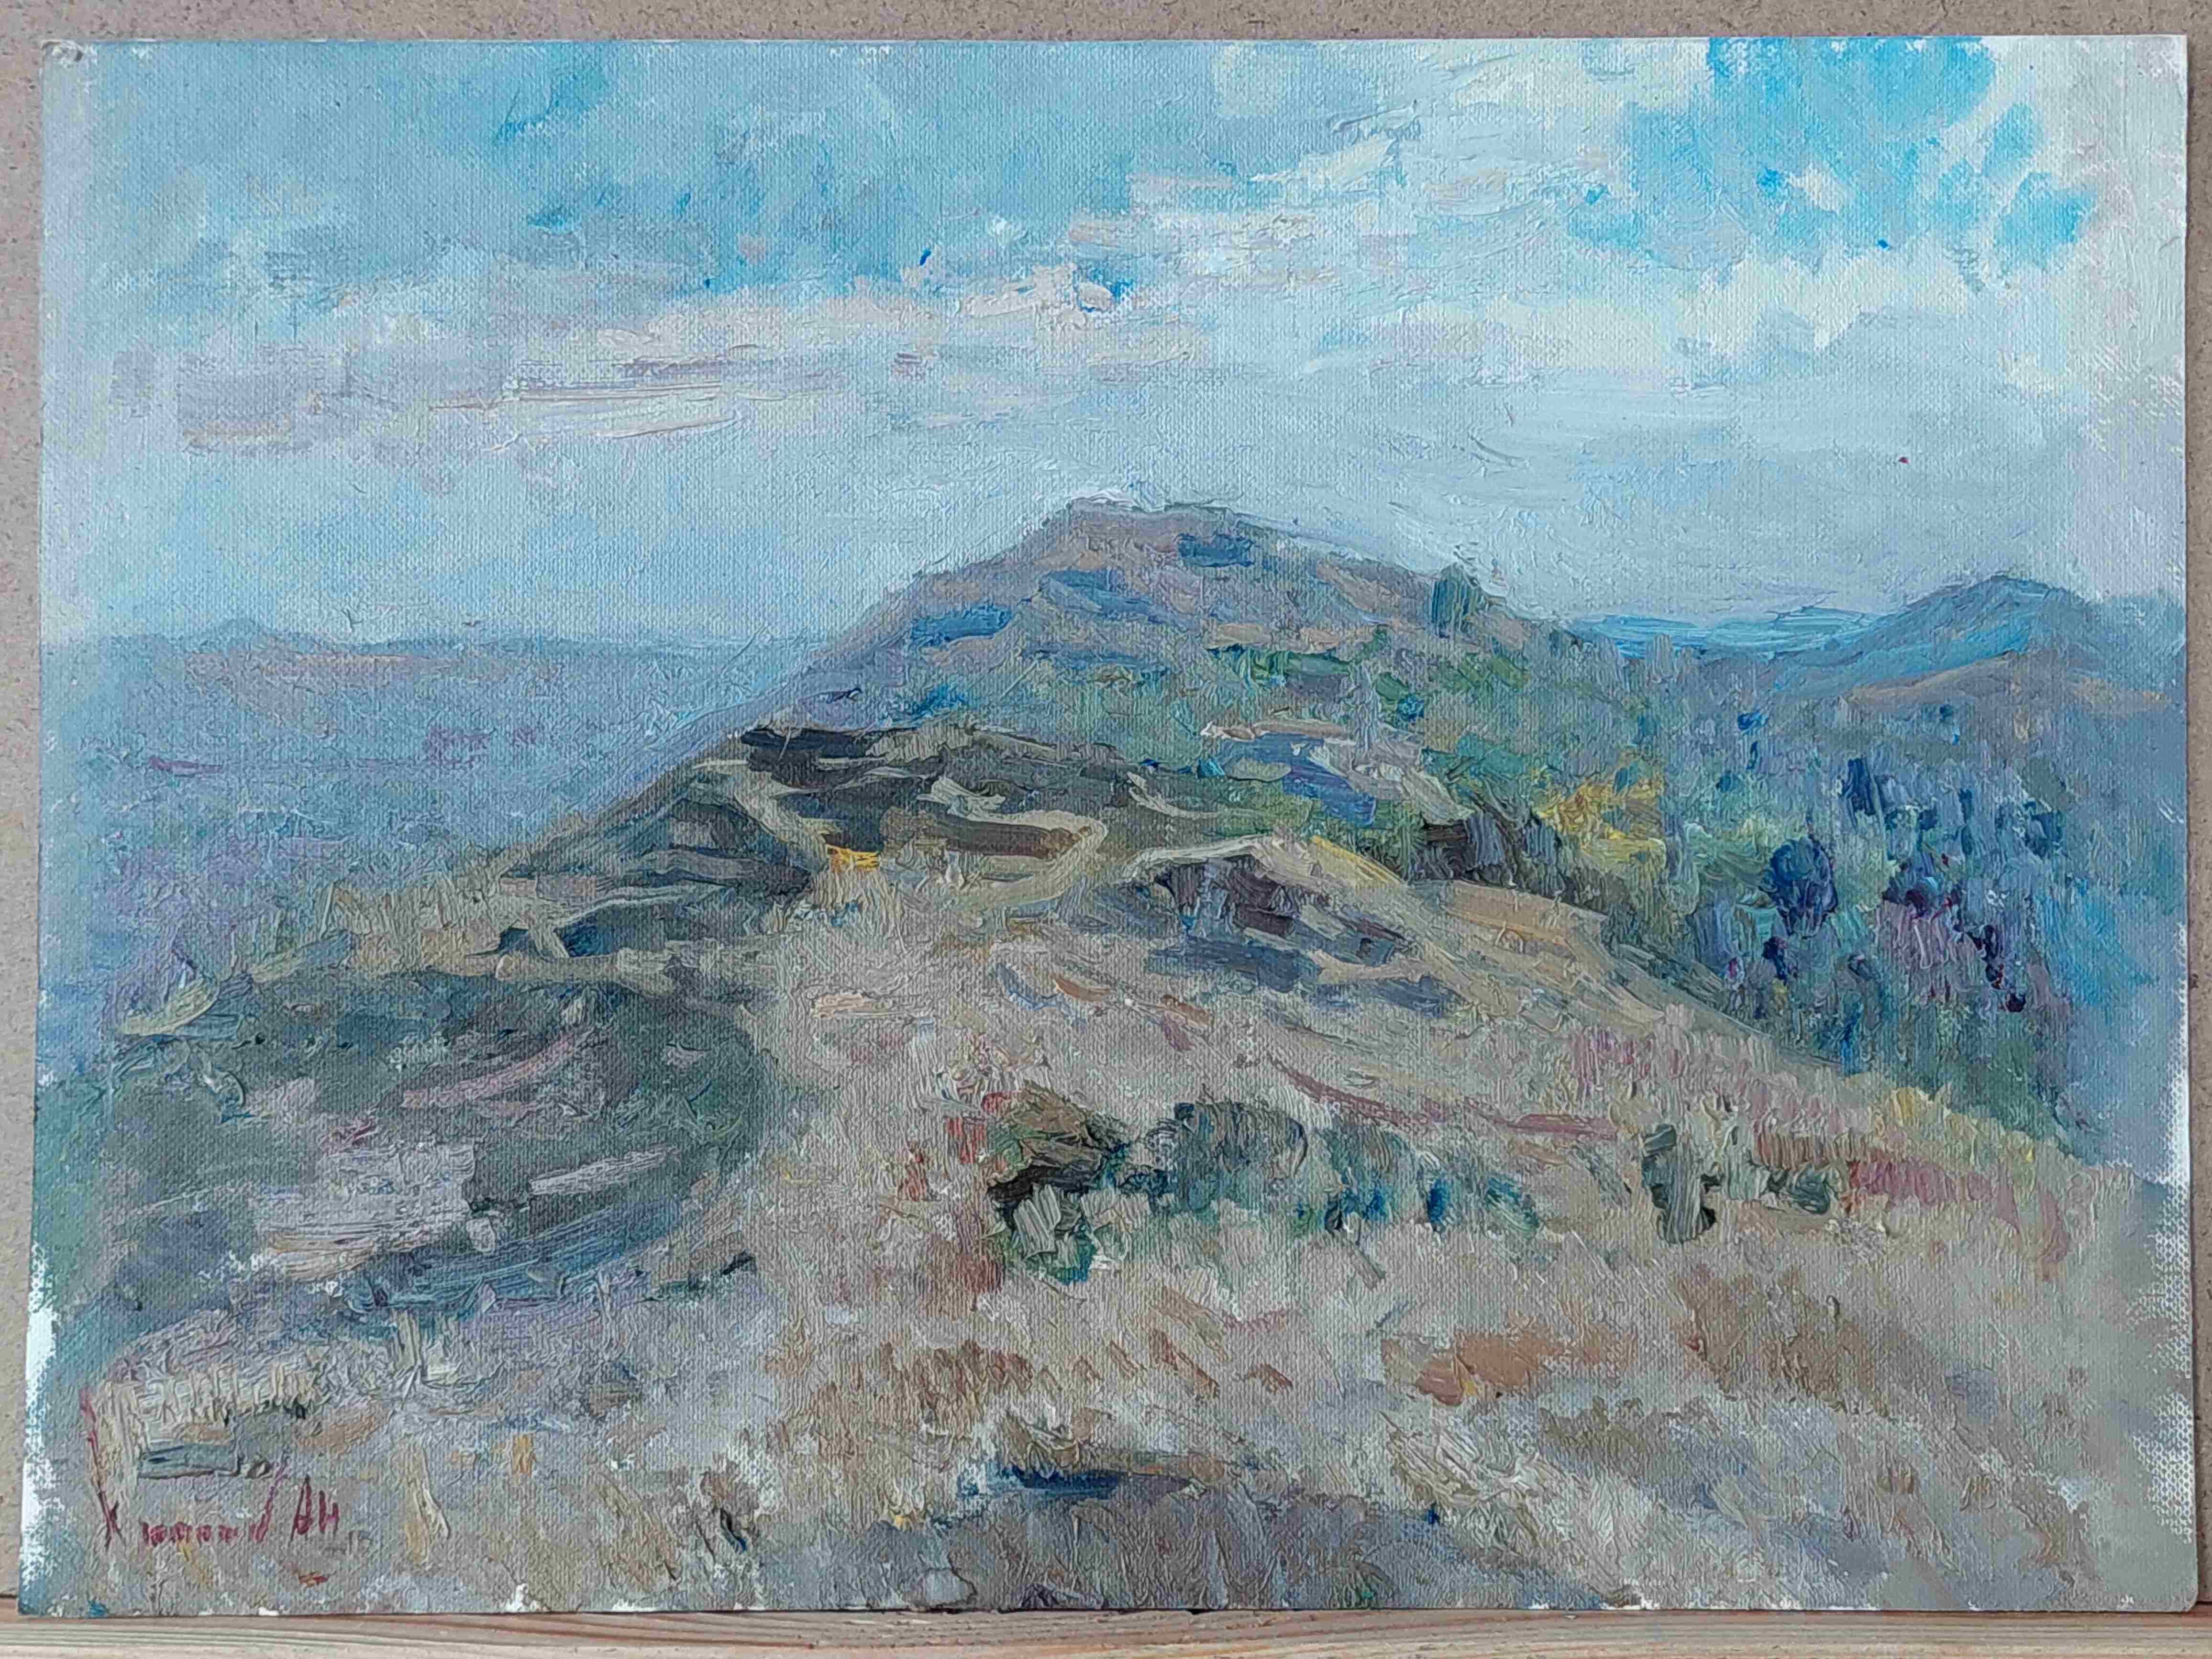 Mount Metridat. Kerch. _ (2012) by Oleksandr Khrapachov